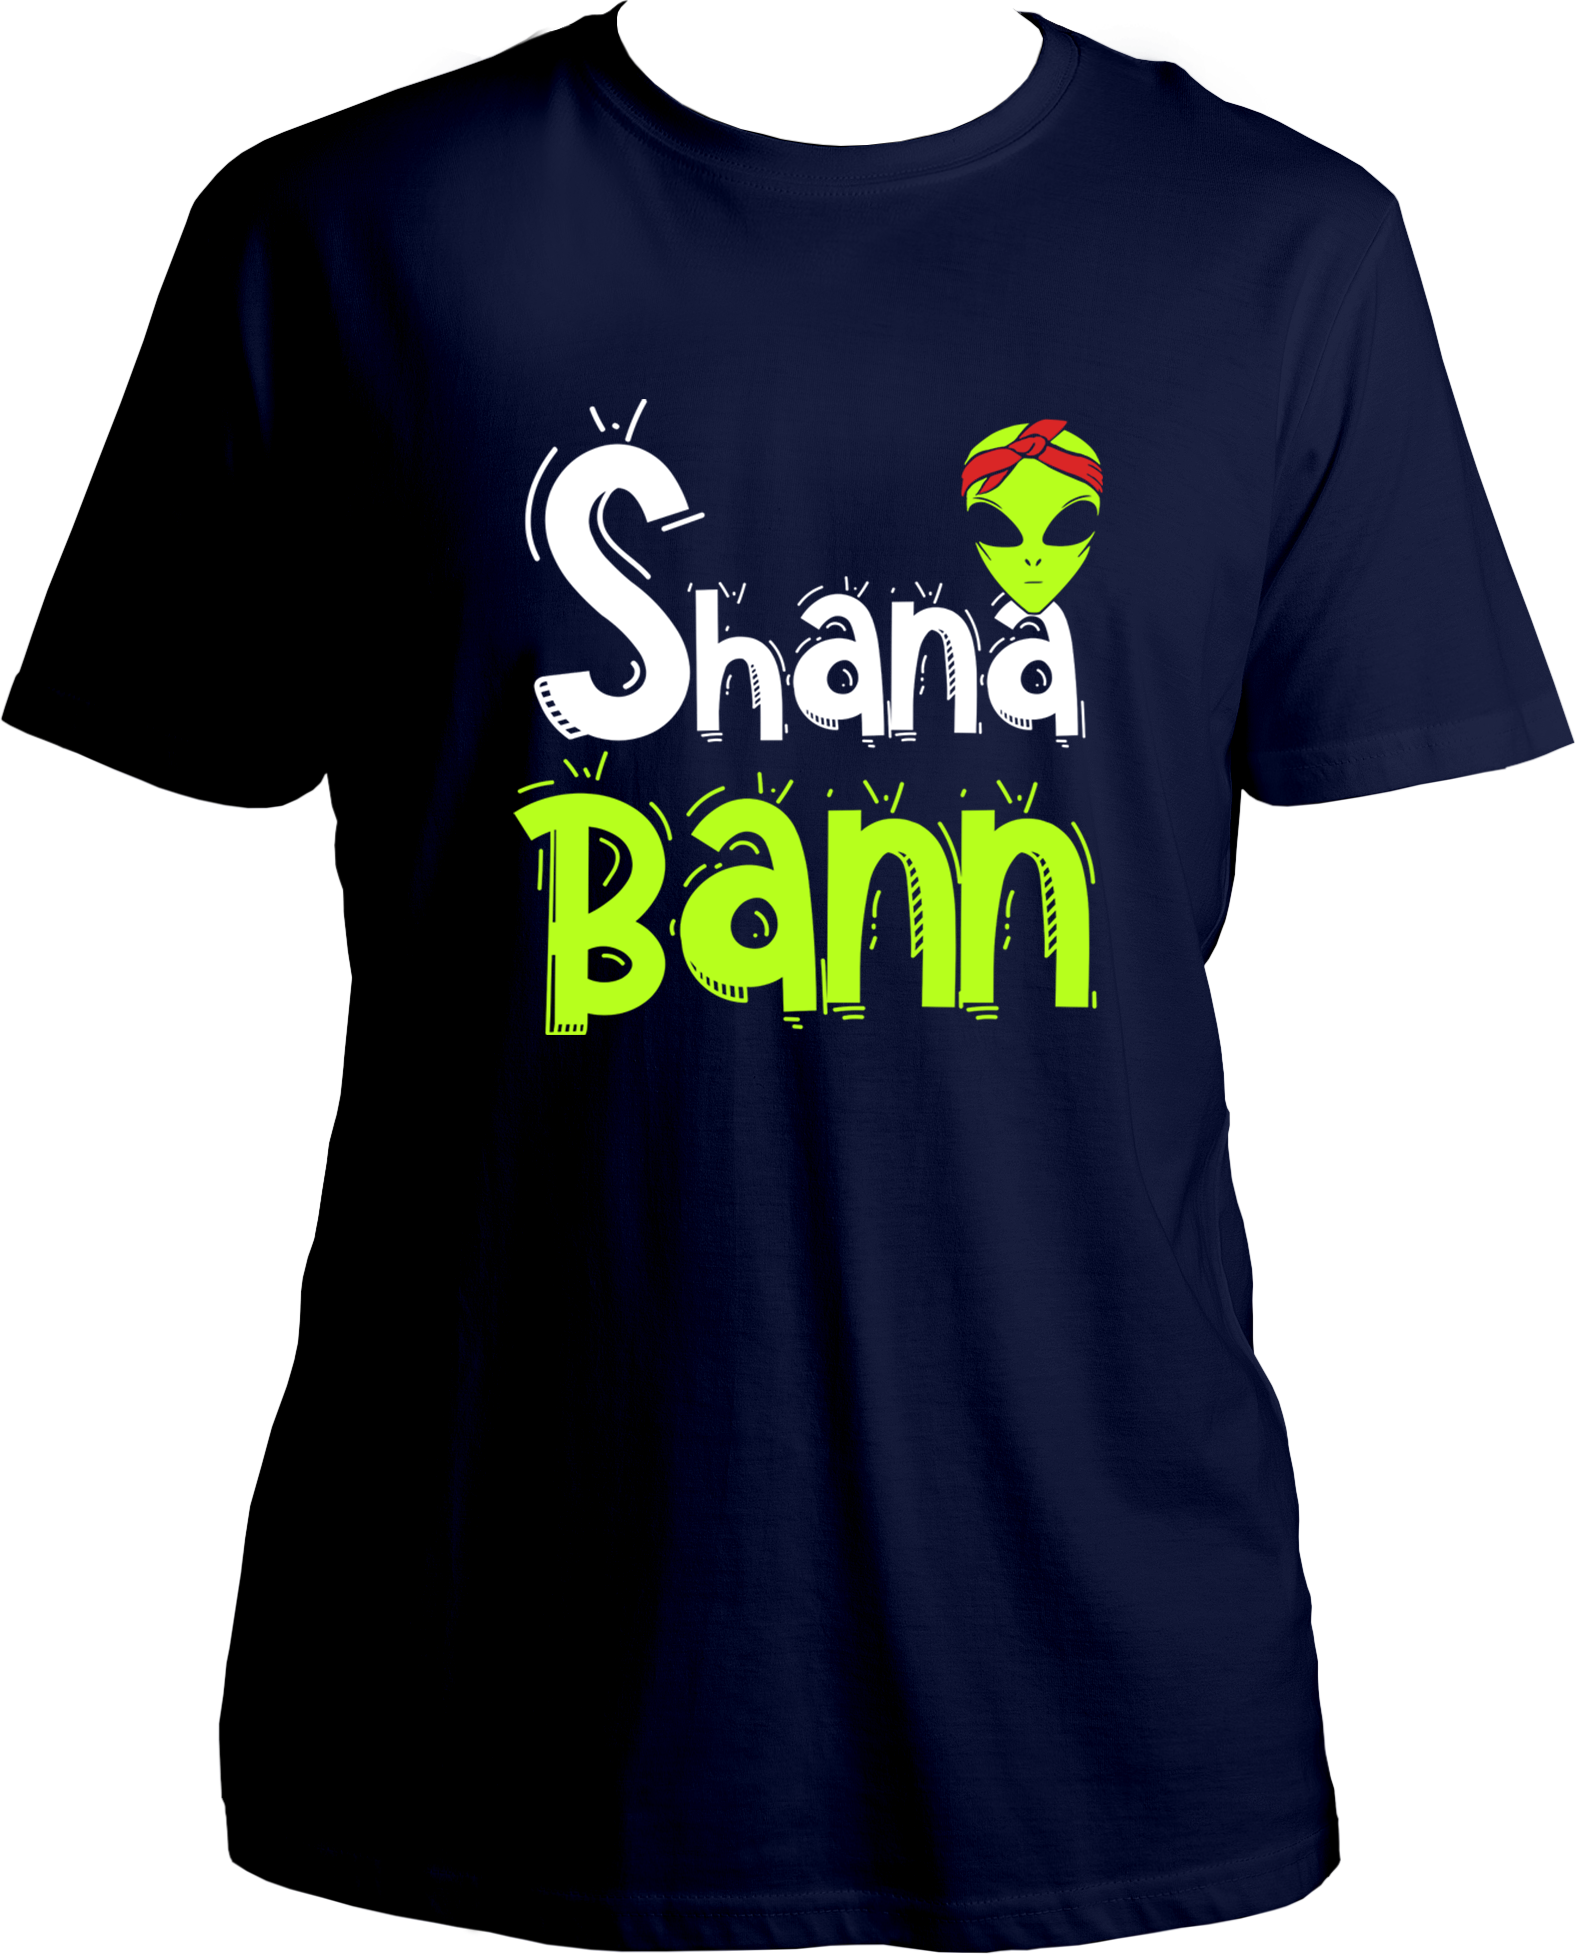 Mc Stan Shana Bann Nike T-shirts, MC Stan Rapper t-shirt design from Shana  Bann song, a nike brand t-shirt fan made